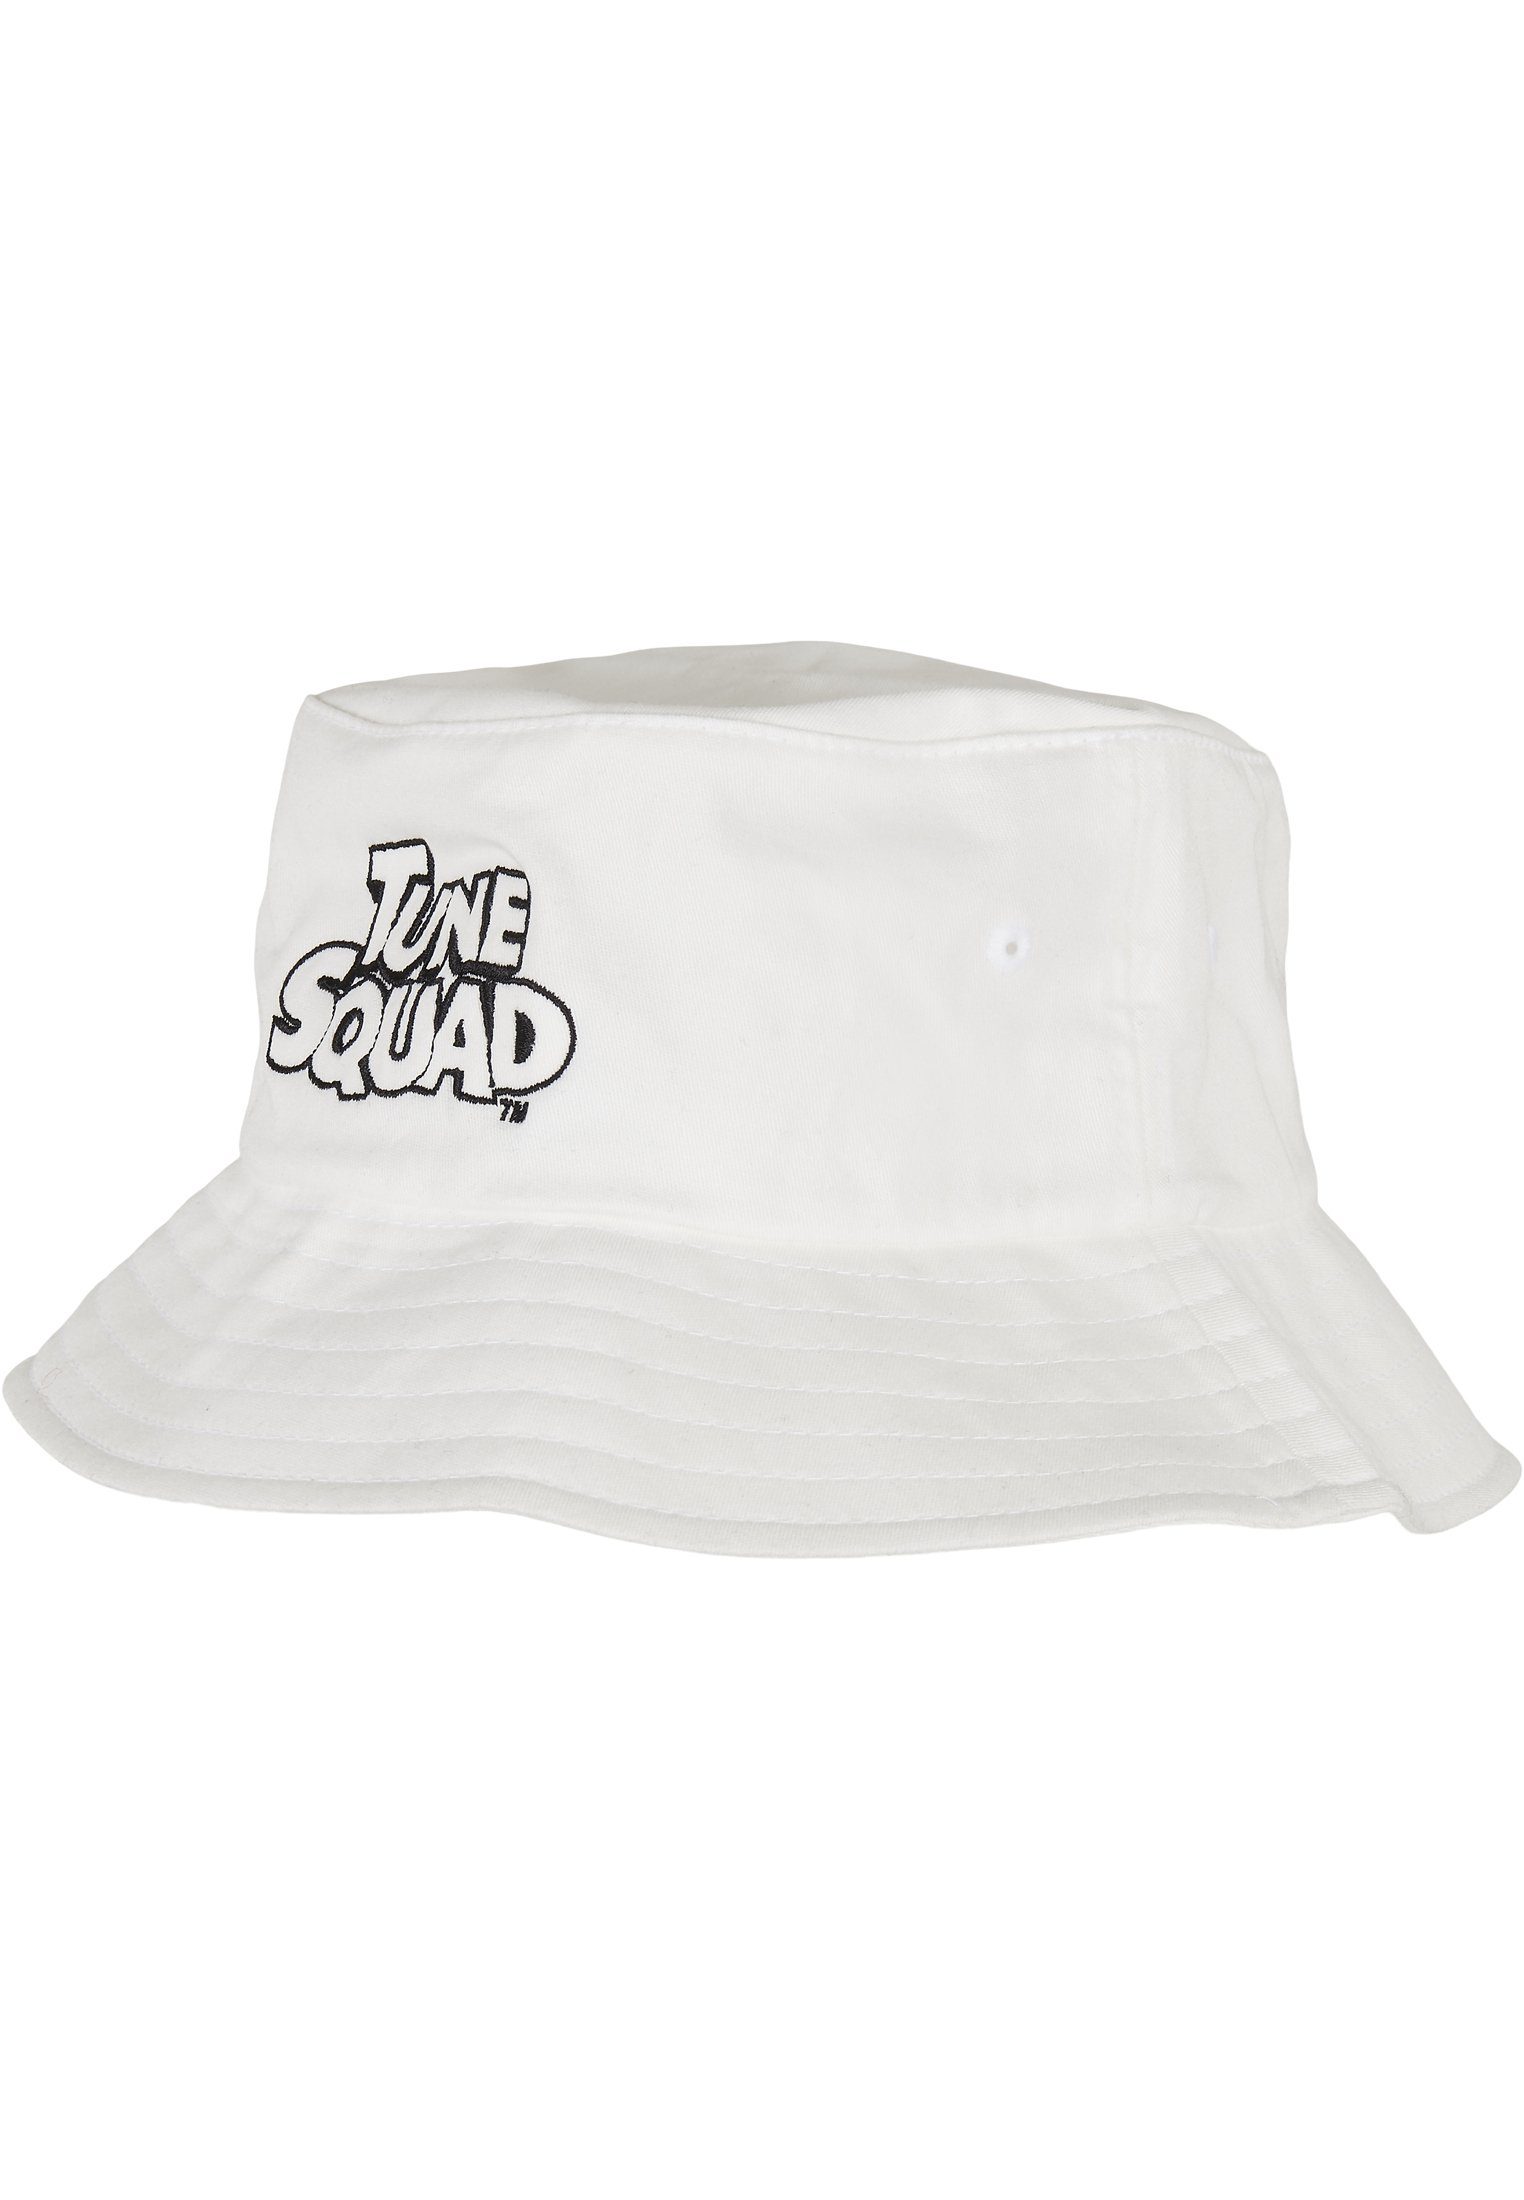 MisterTee Flex Cap Bucket Tune Bucket Hat Squad Wording Hat